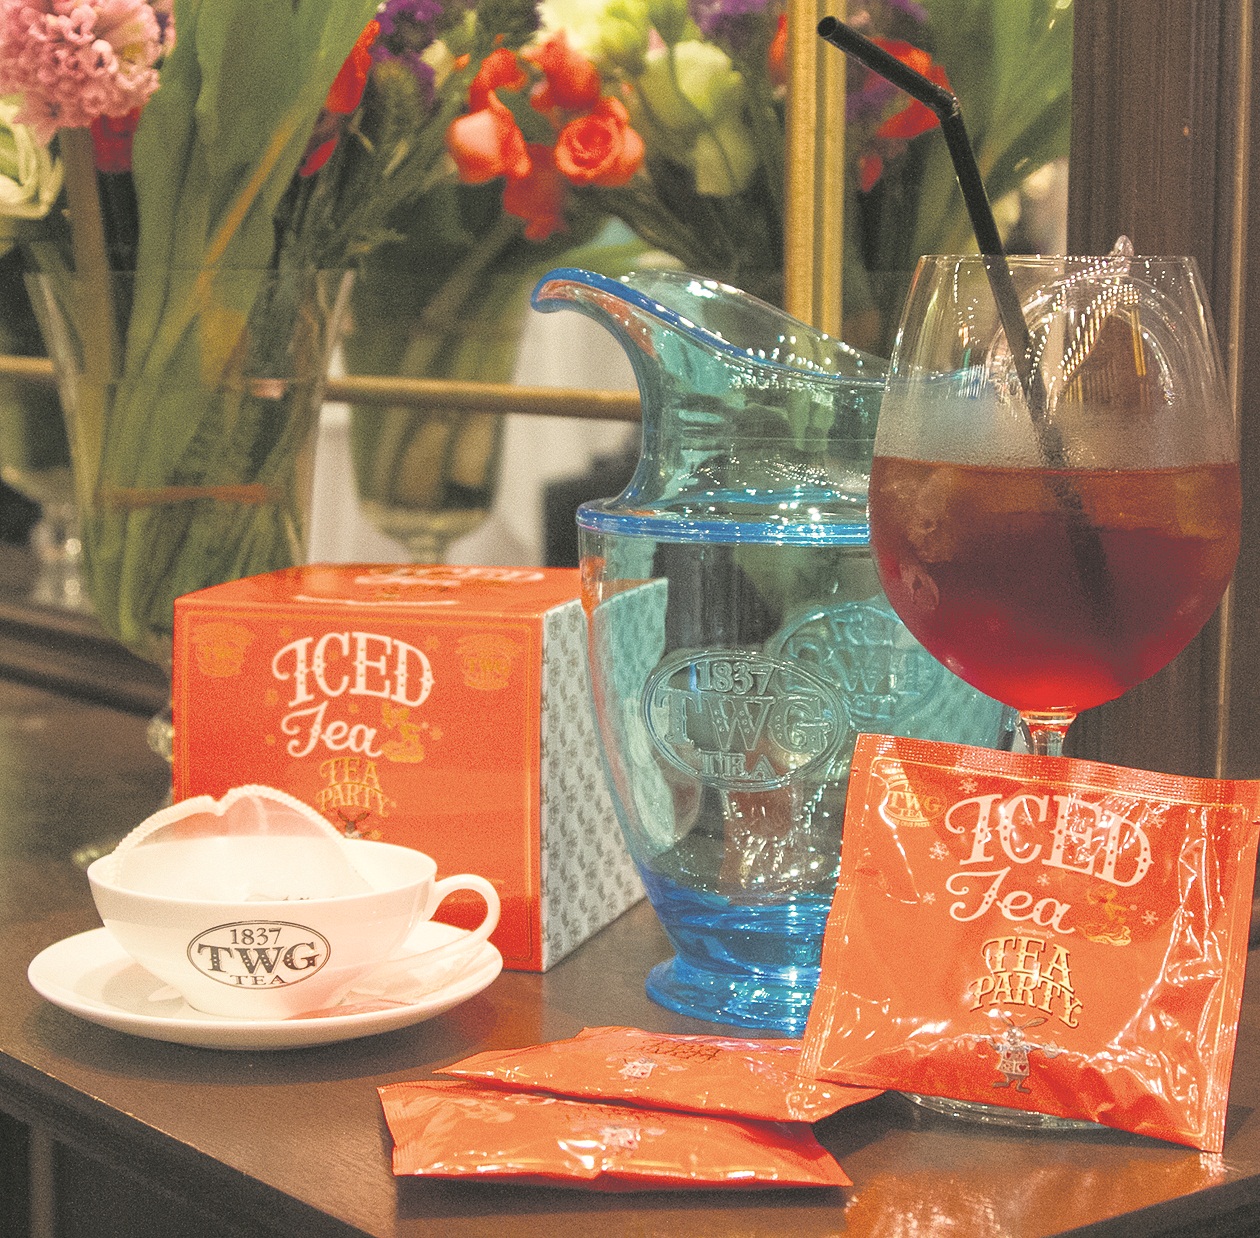 TWG Tea flavored iced teabag and iced tea carafe